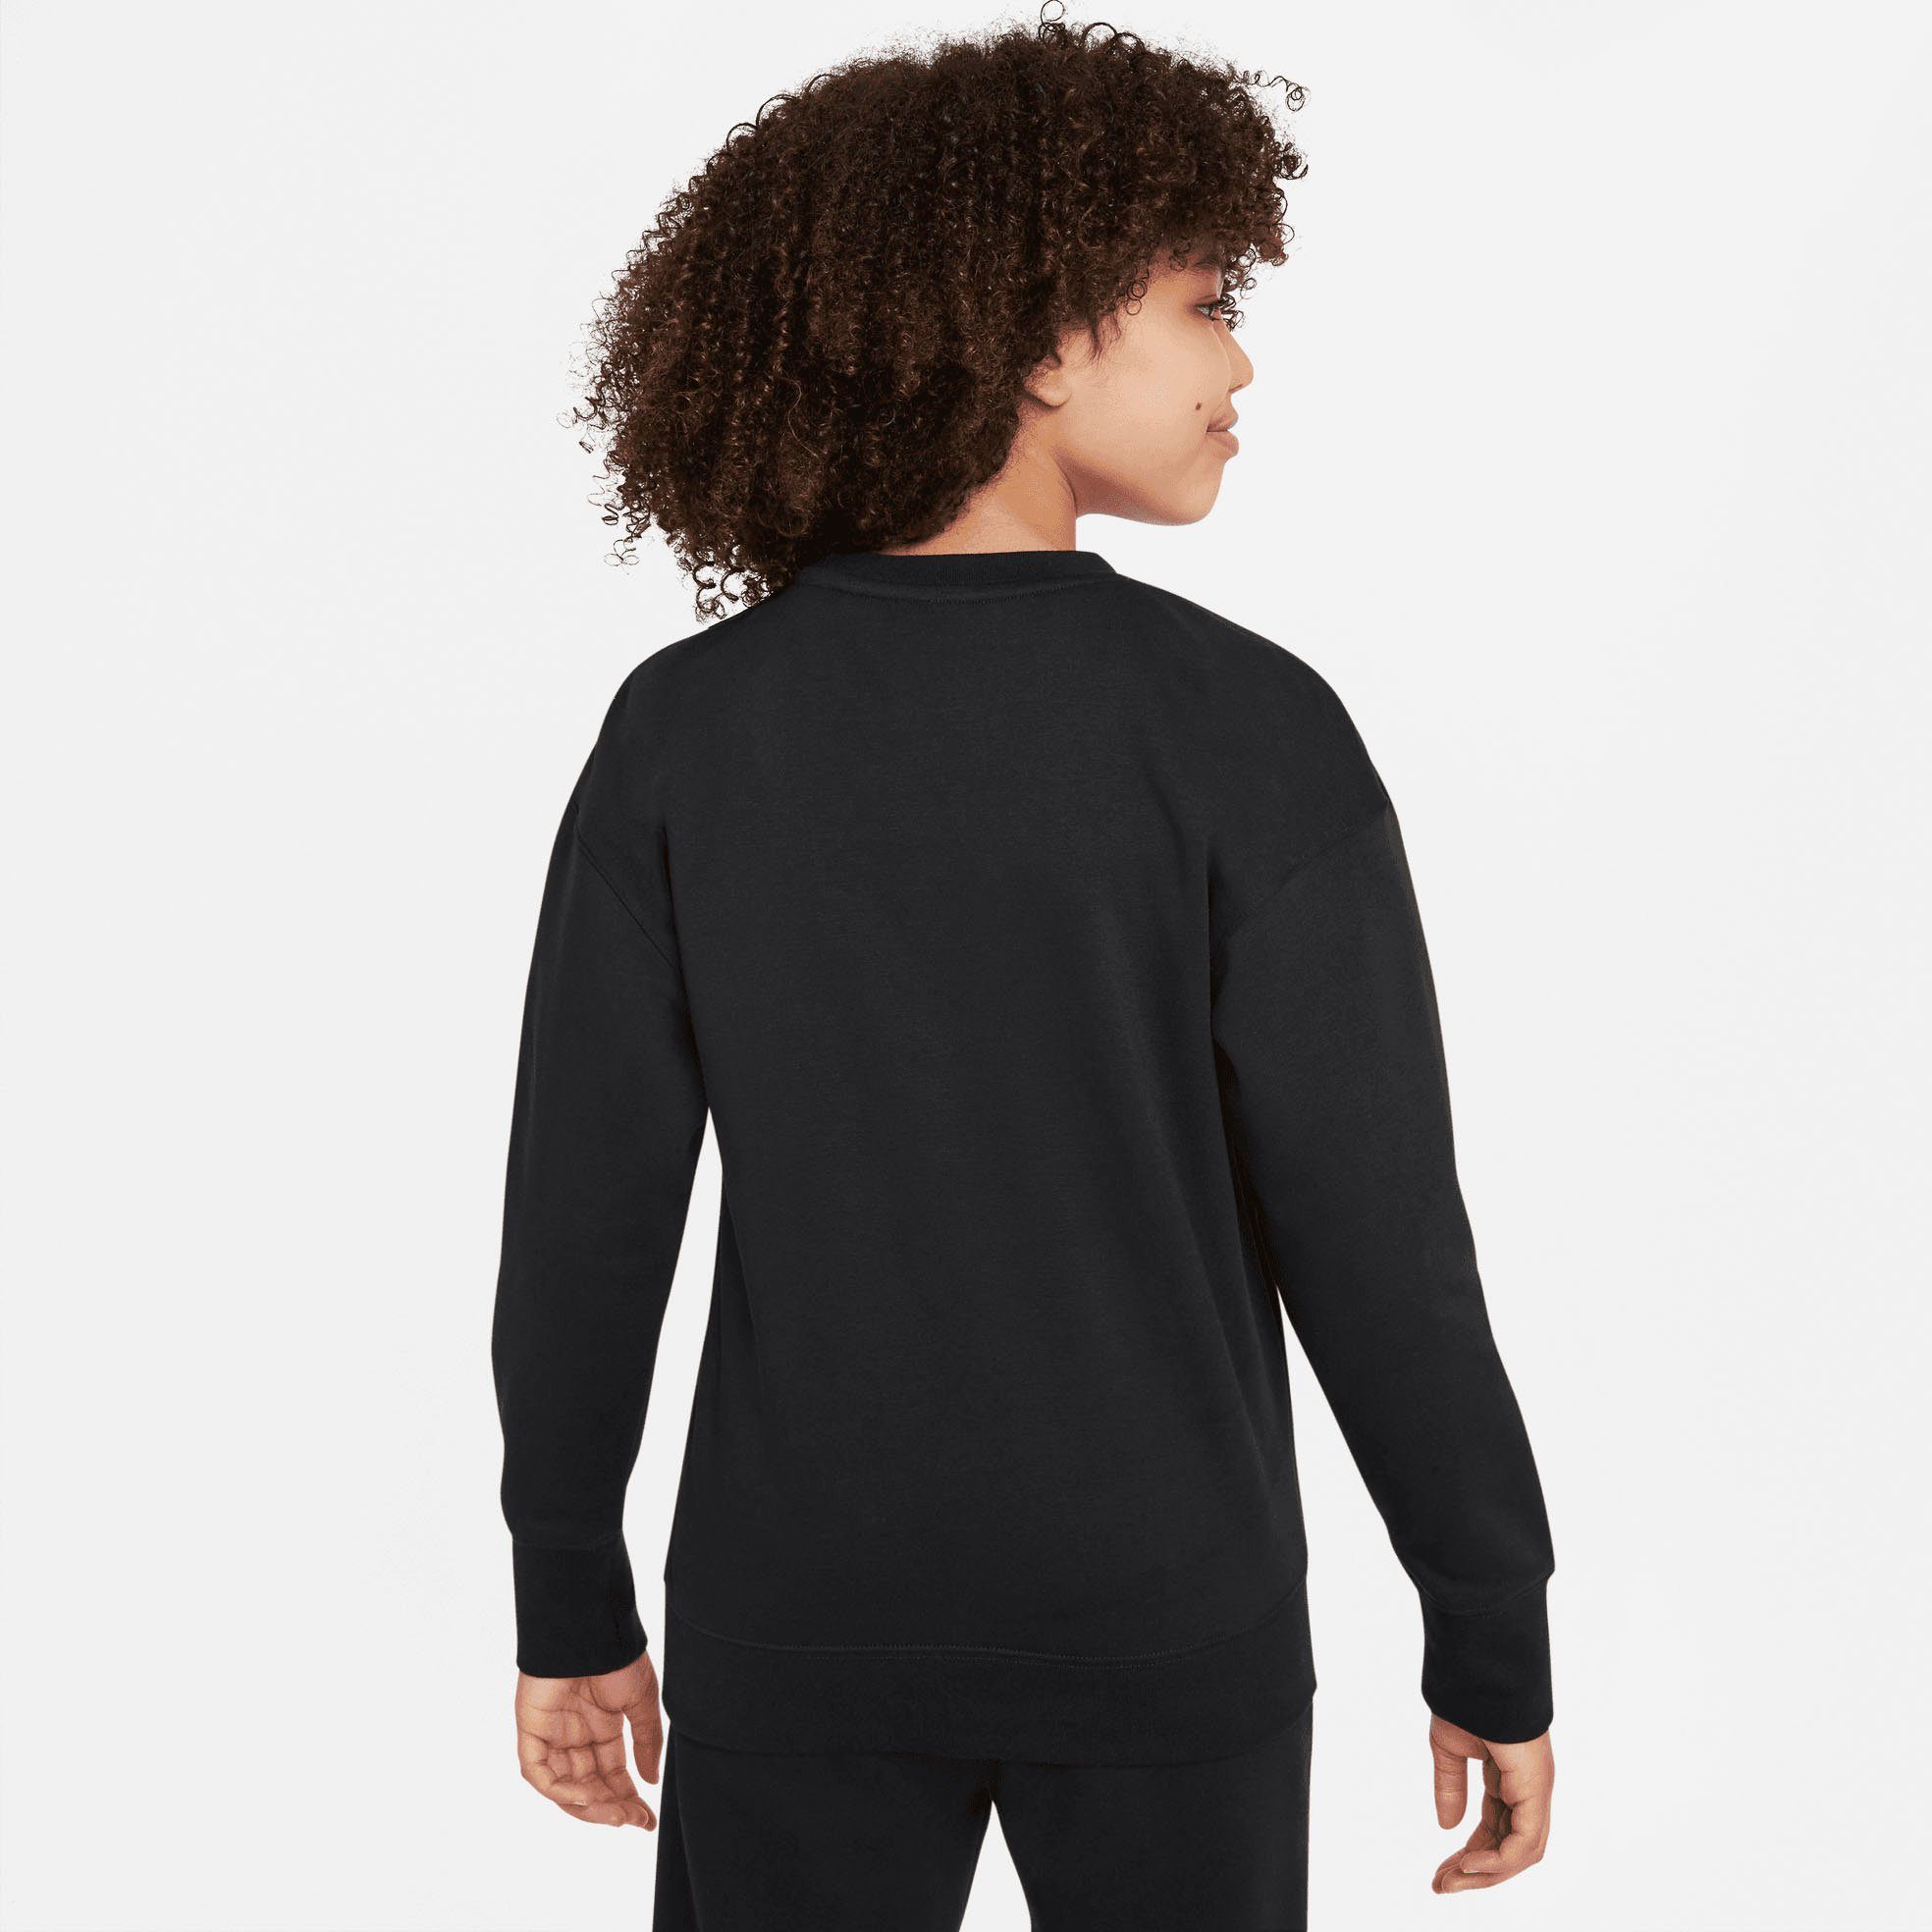 Nike Sportswear Sweatshirt Club Fleece Big (Girls) schwarz Kids' Sweatshirt Crew